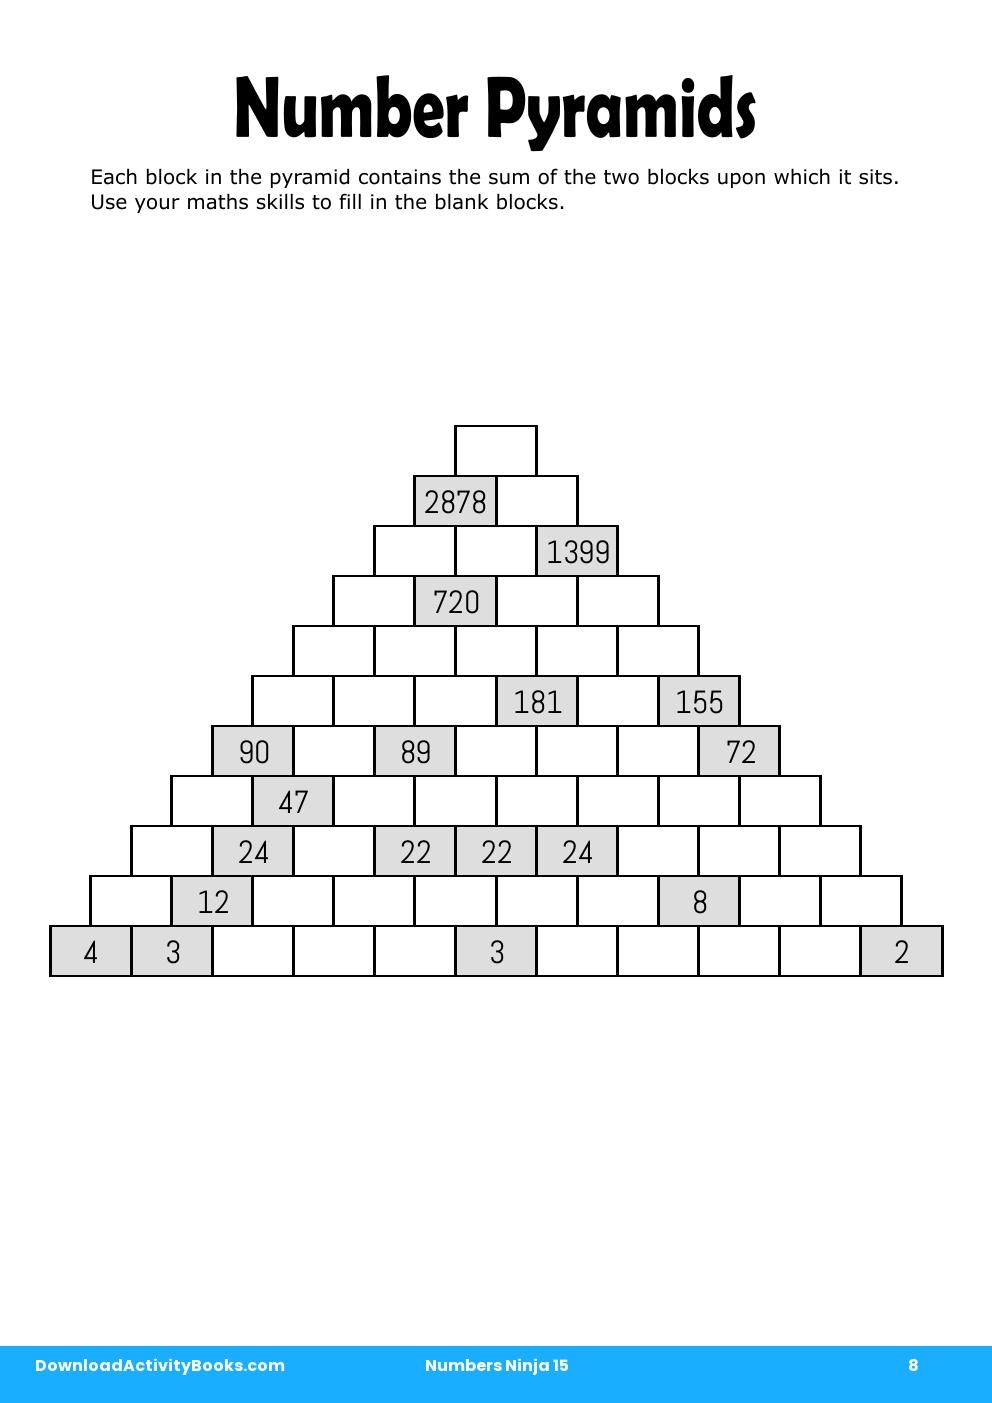 Number Pyramids in Numbers Ninja 15